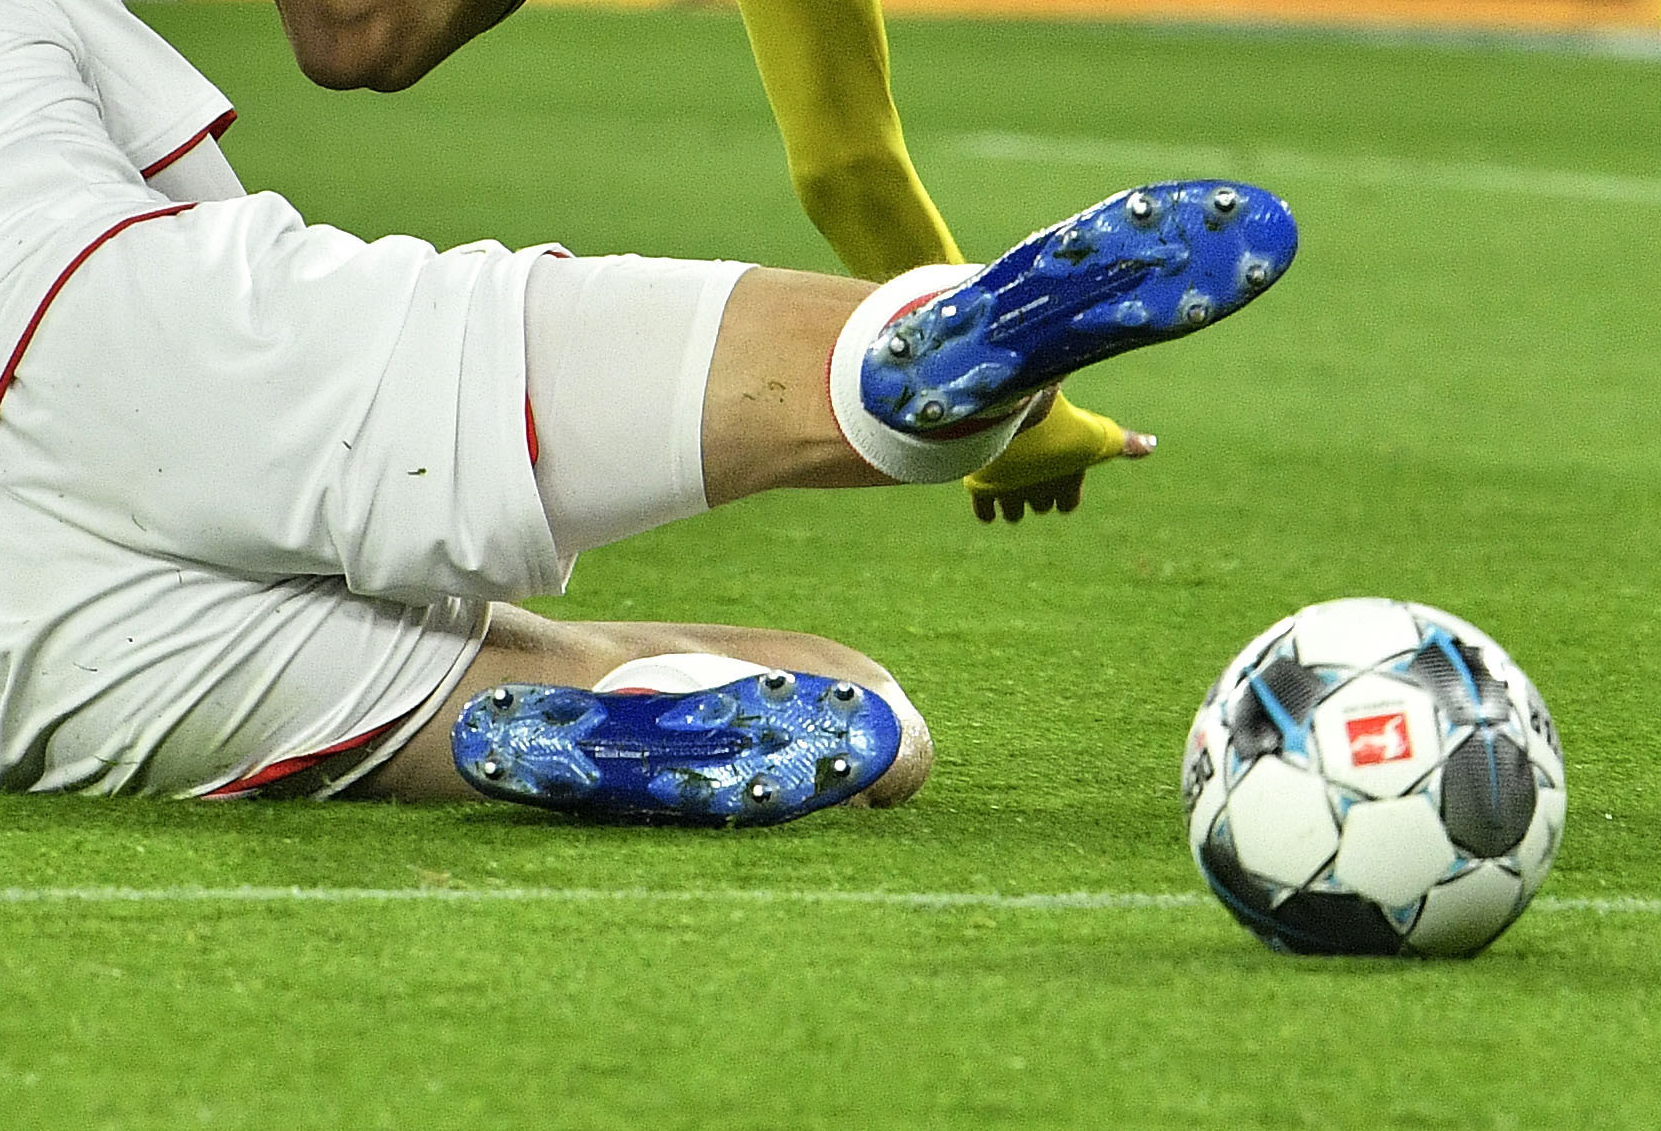 Soccer training goes on at Cologne despite positive tests